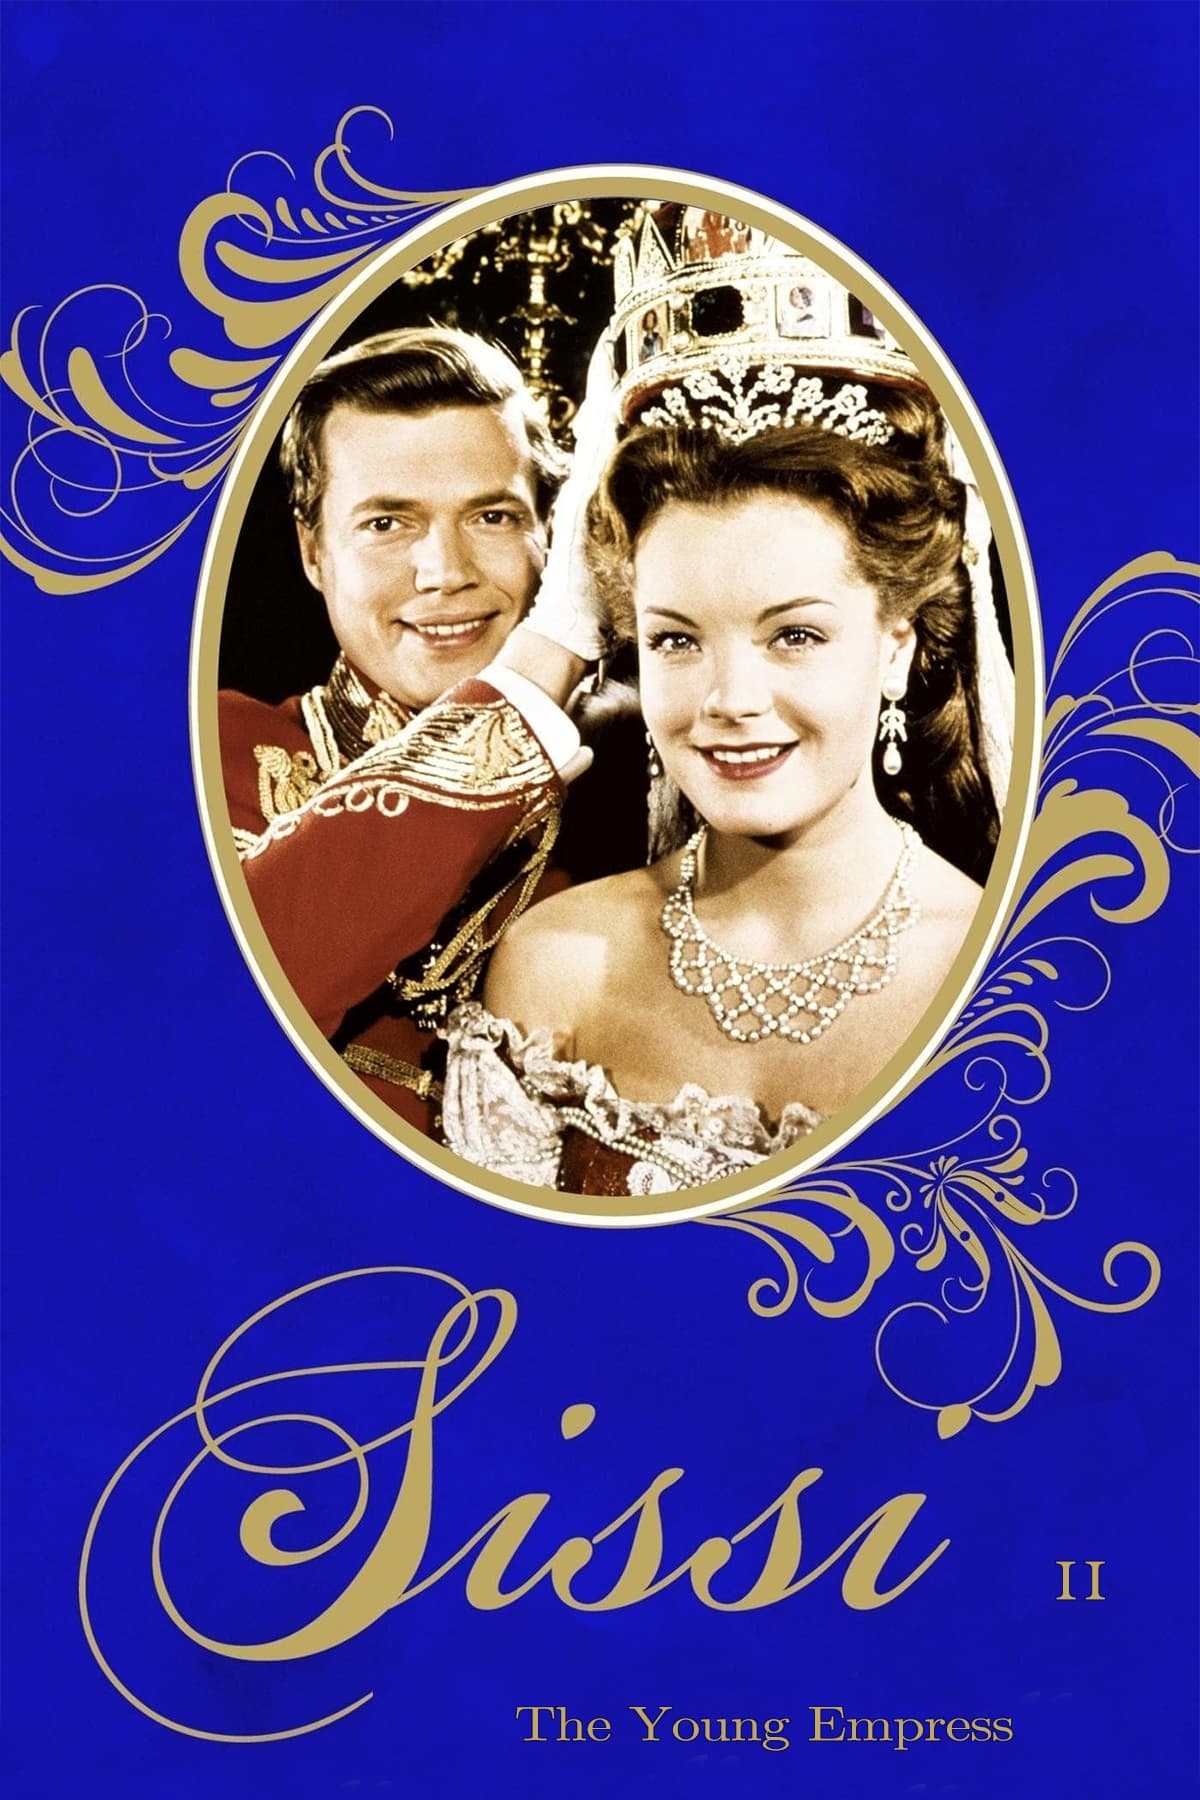 Sissi, A Imperatriz (1956)